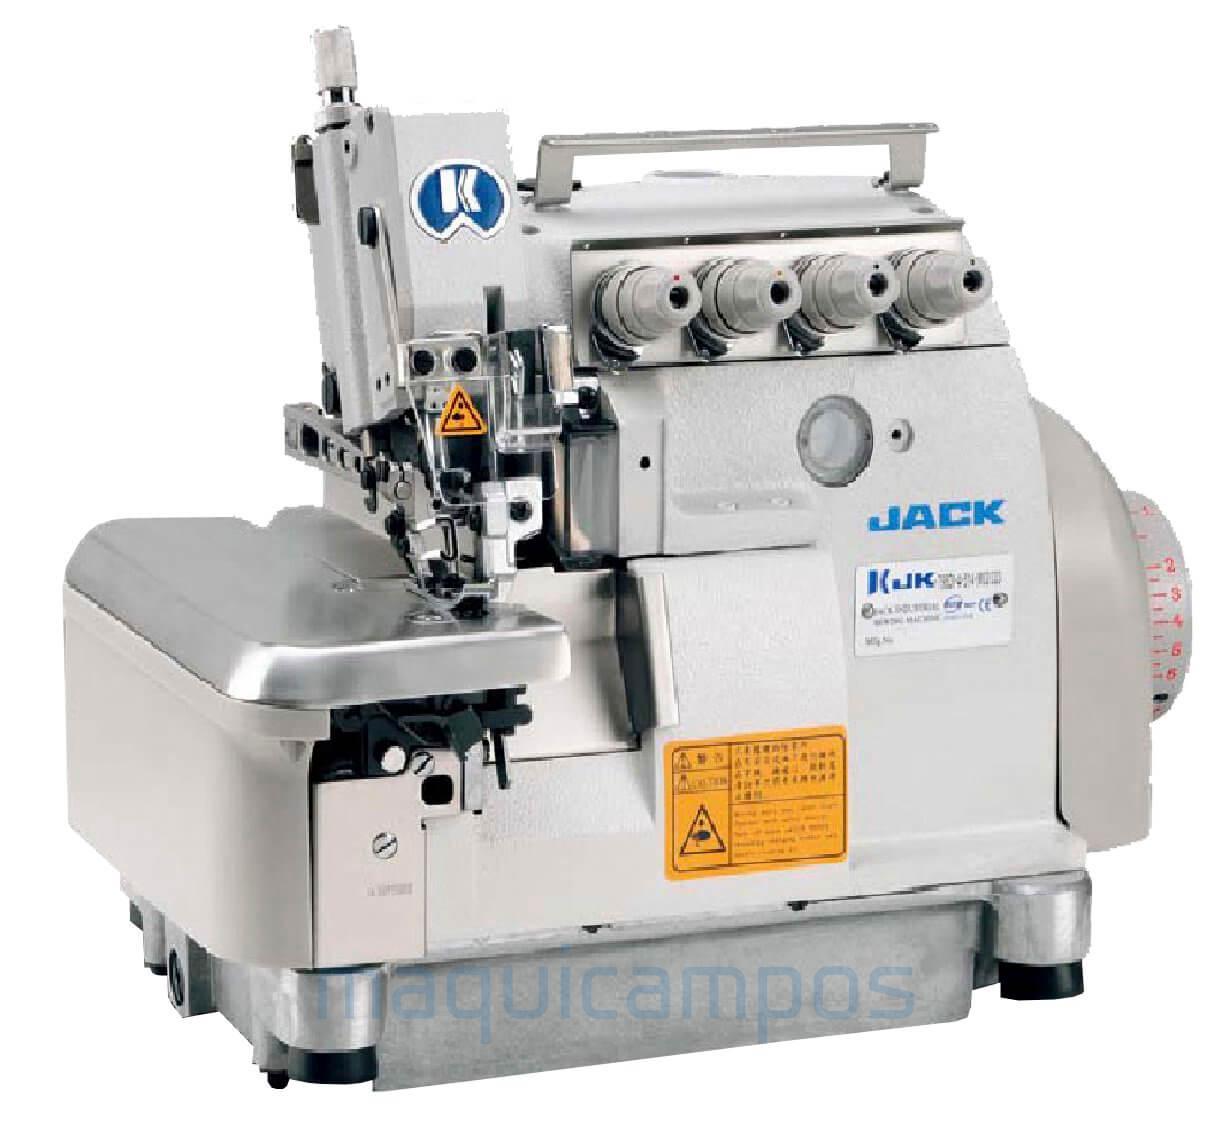 Jack JK-798BDI-5 Overlock Sewing Machine